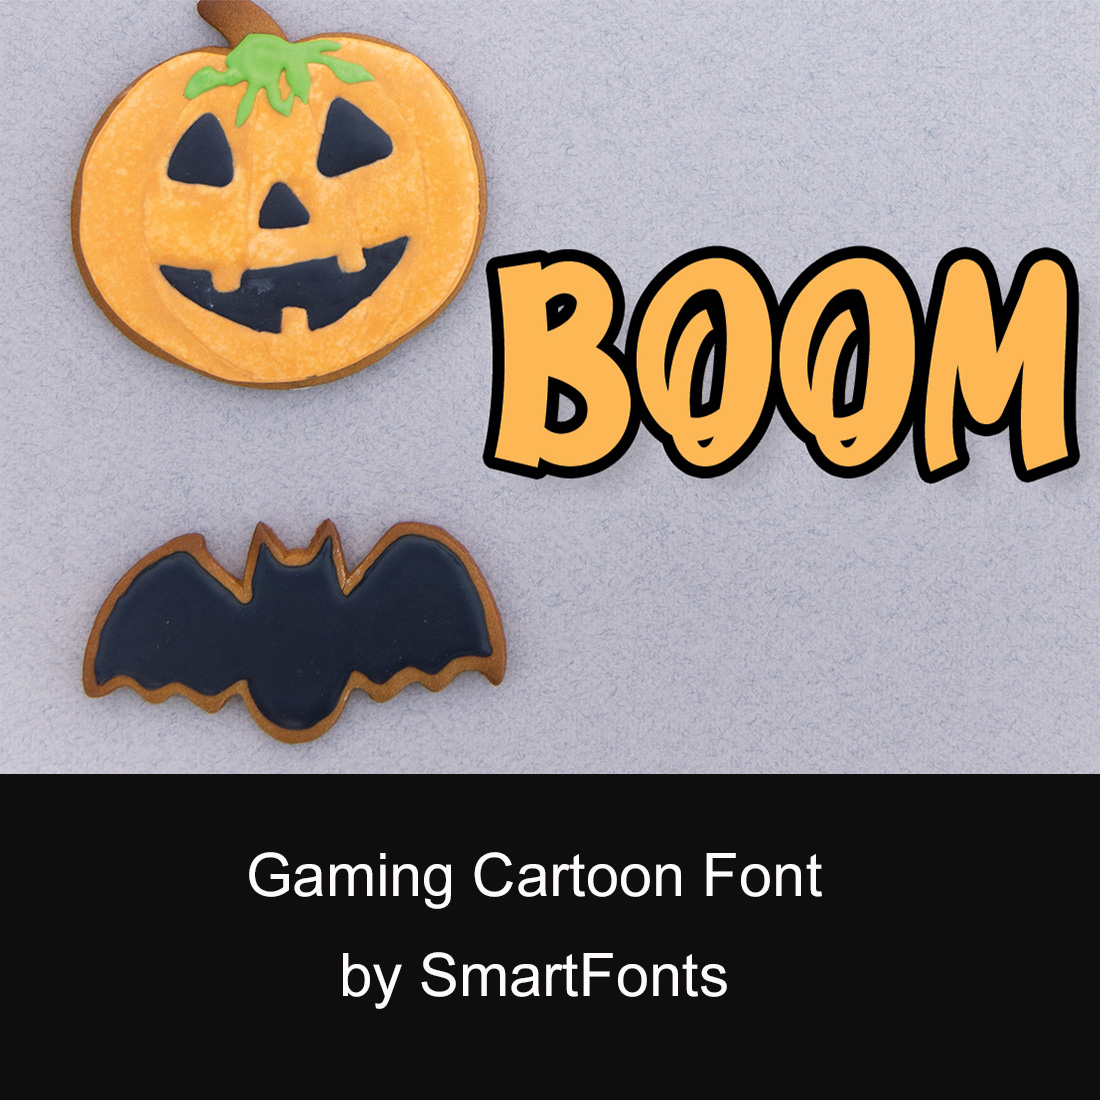 Gaming Cartoon Font cover image.